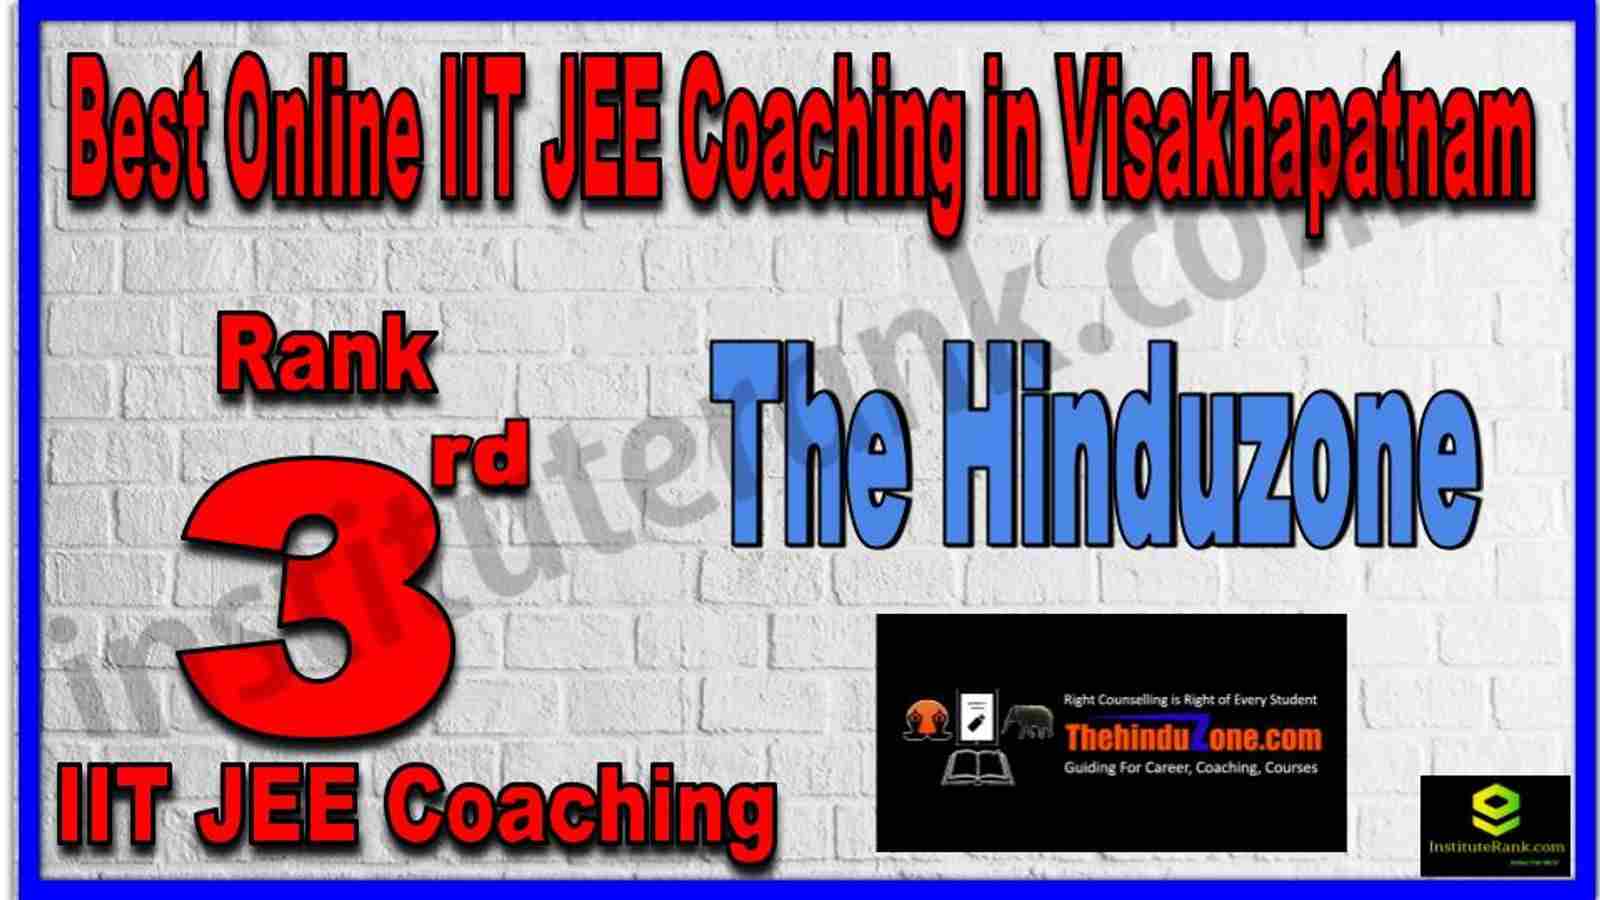 Rank 3rd Best Online IIT JEE Coaching in Visakhapatnam